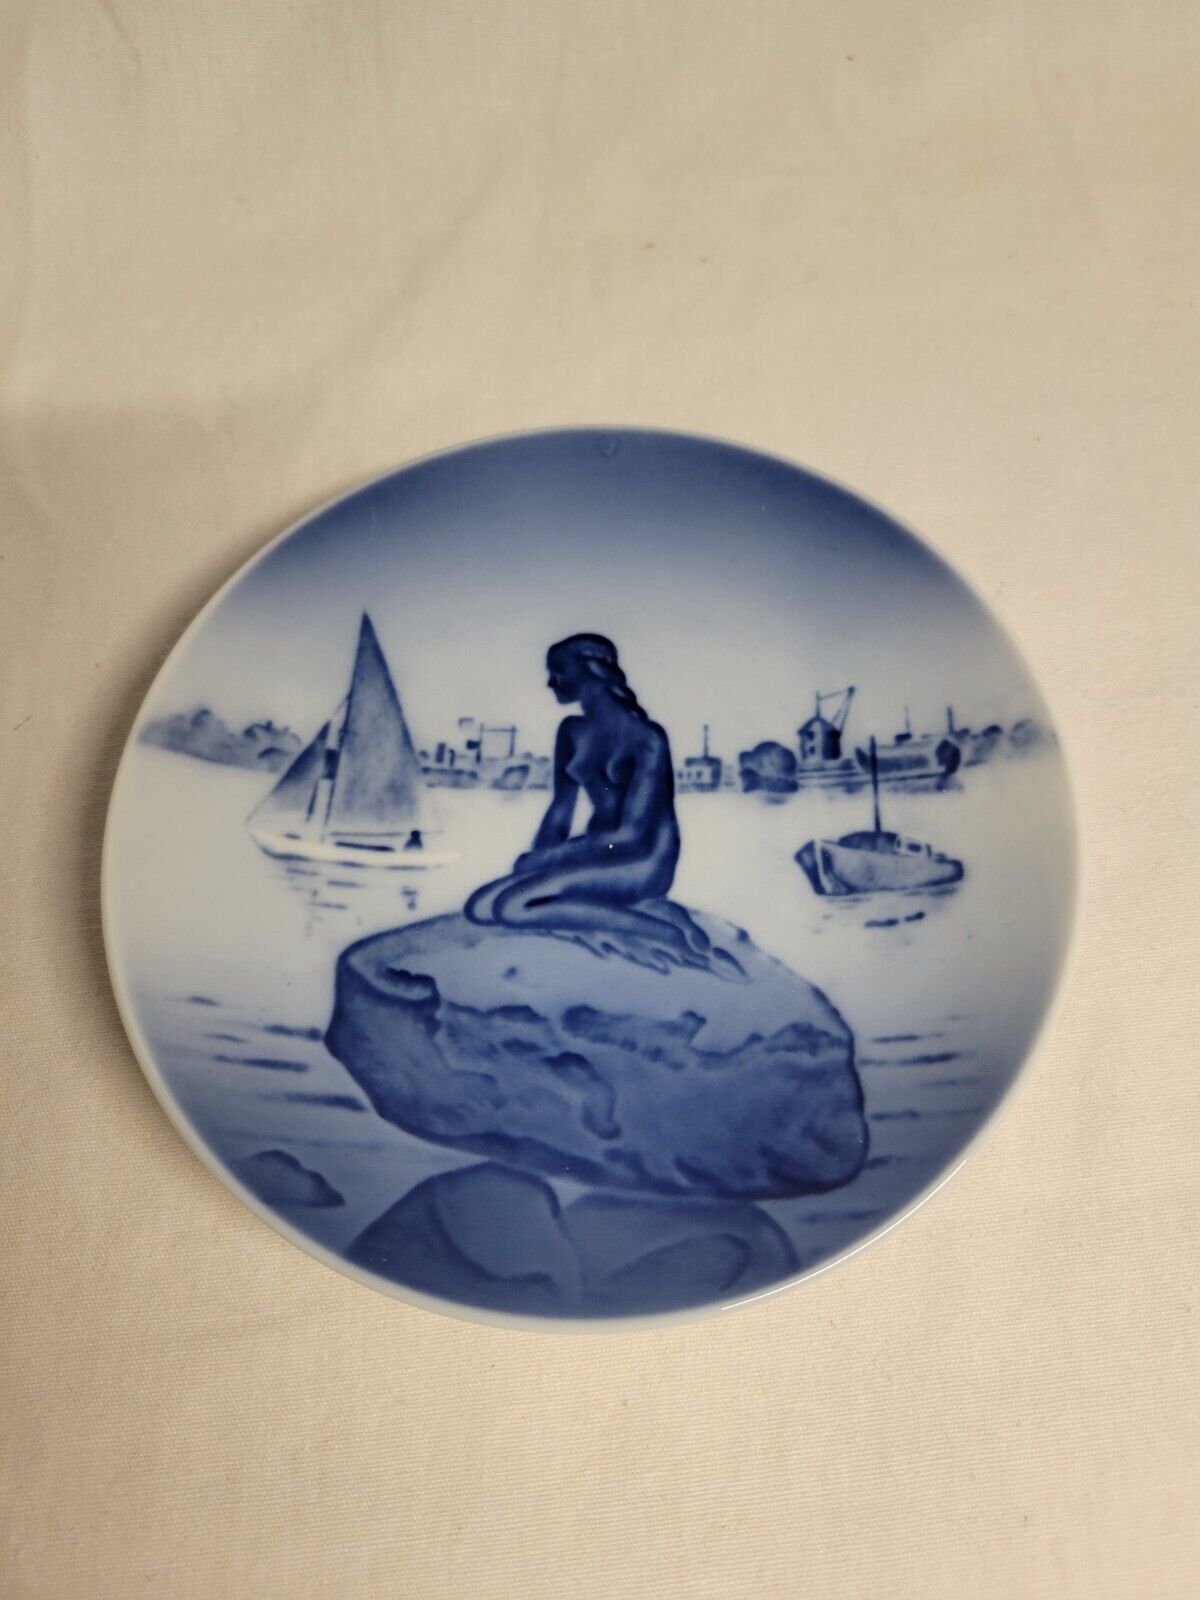 Royal Copenhagen Blue and White Plate Langelinie Mermaid Dish Signed RY